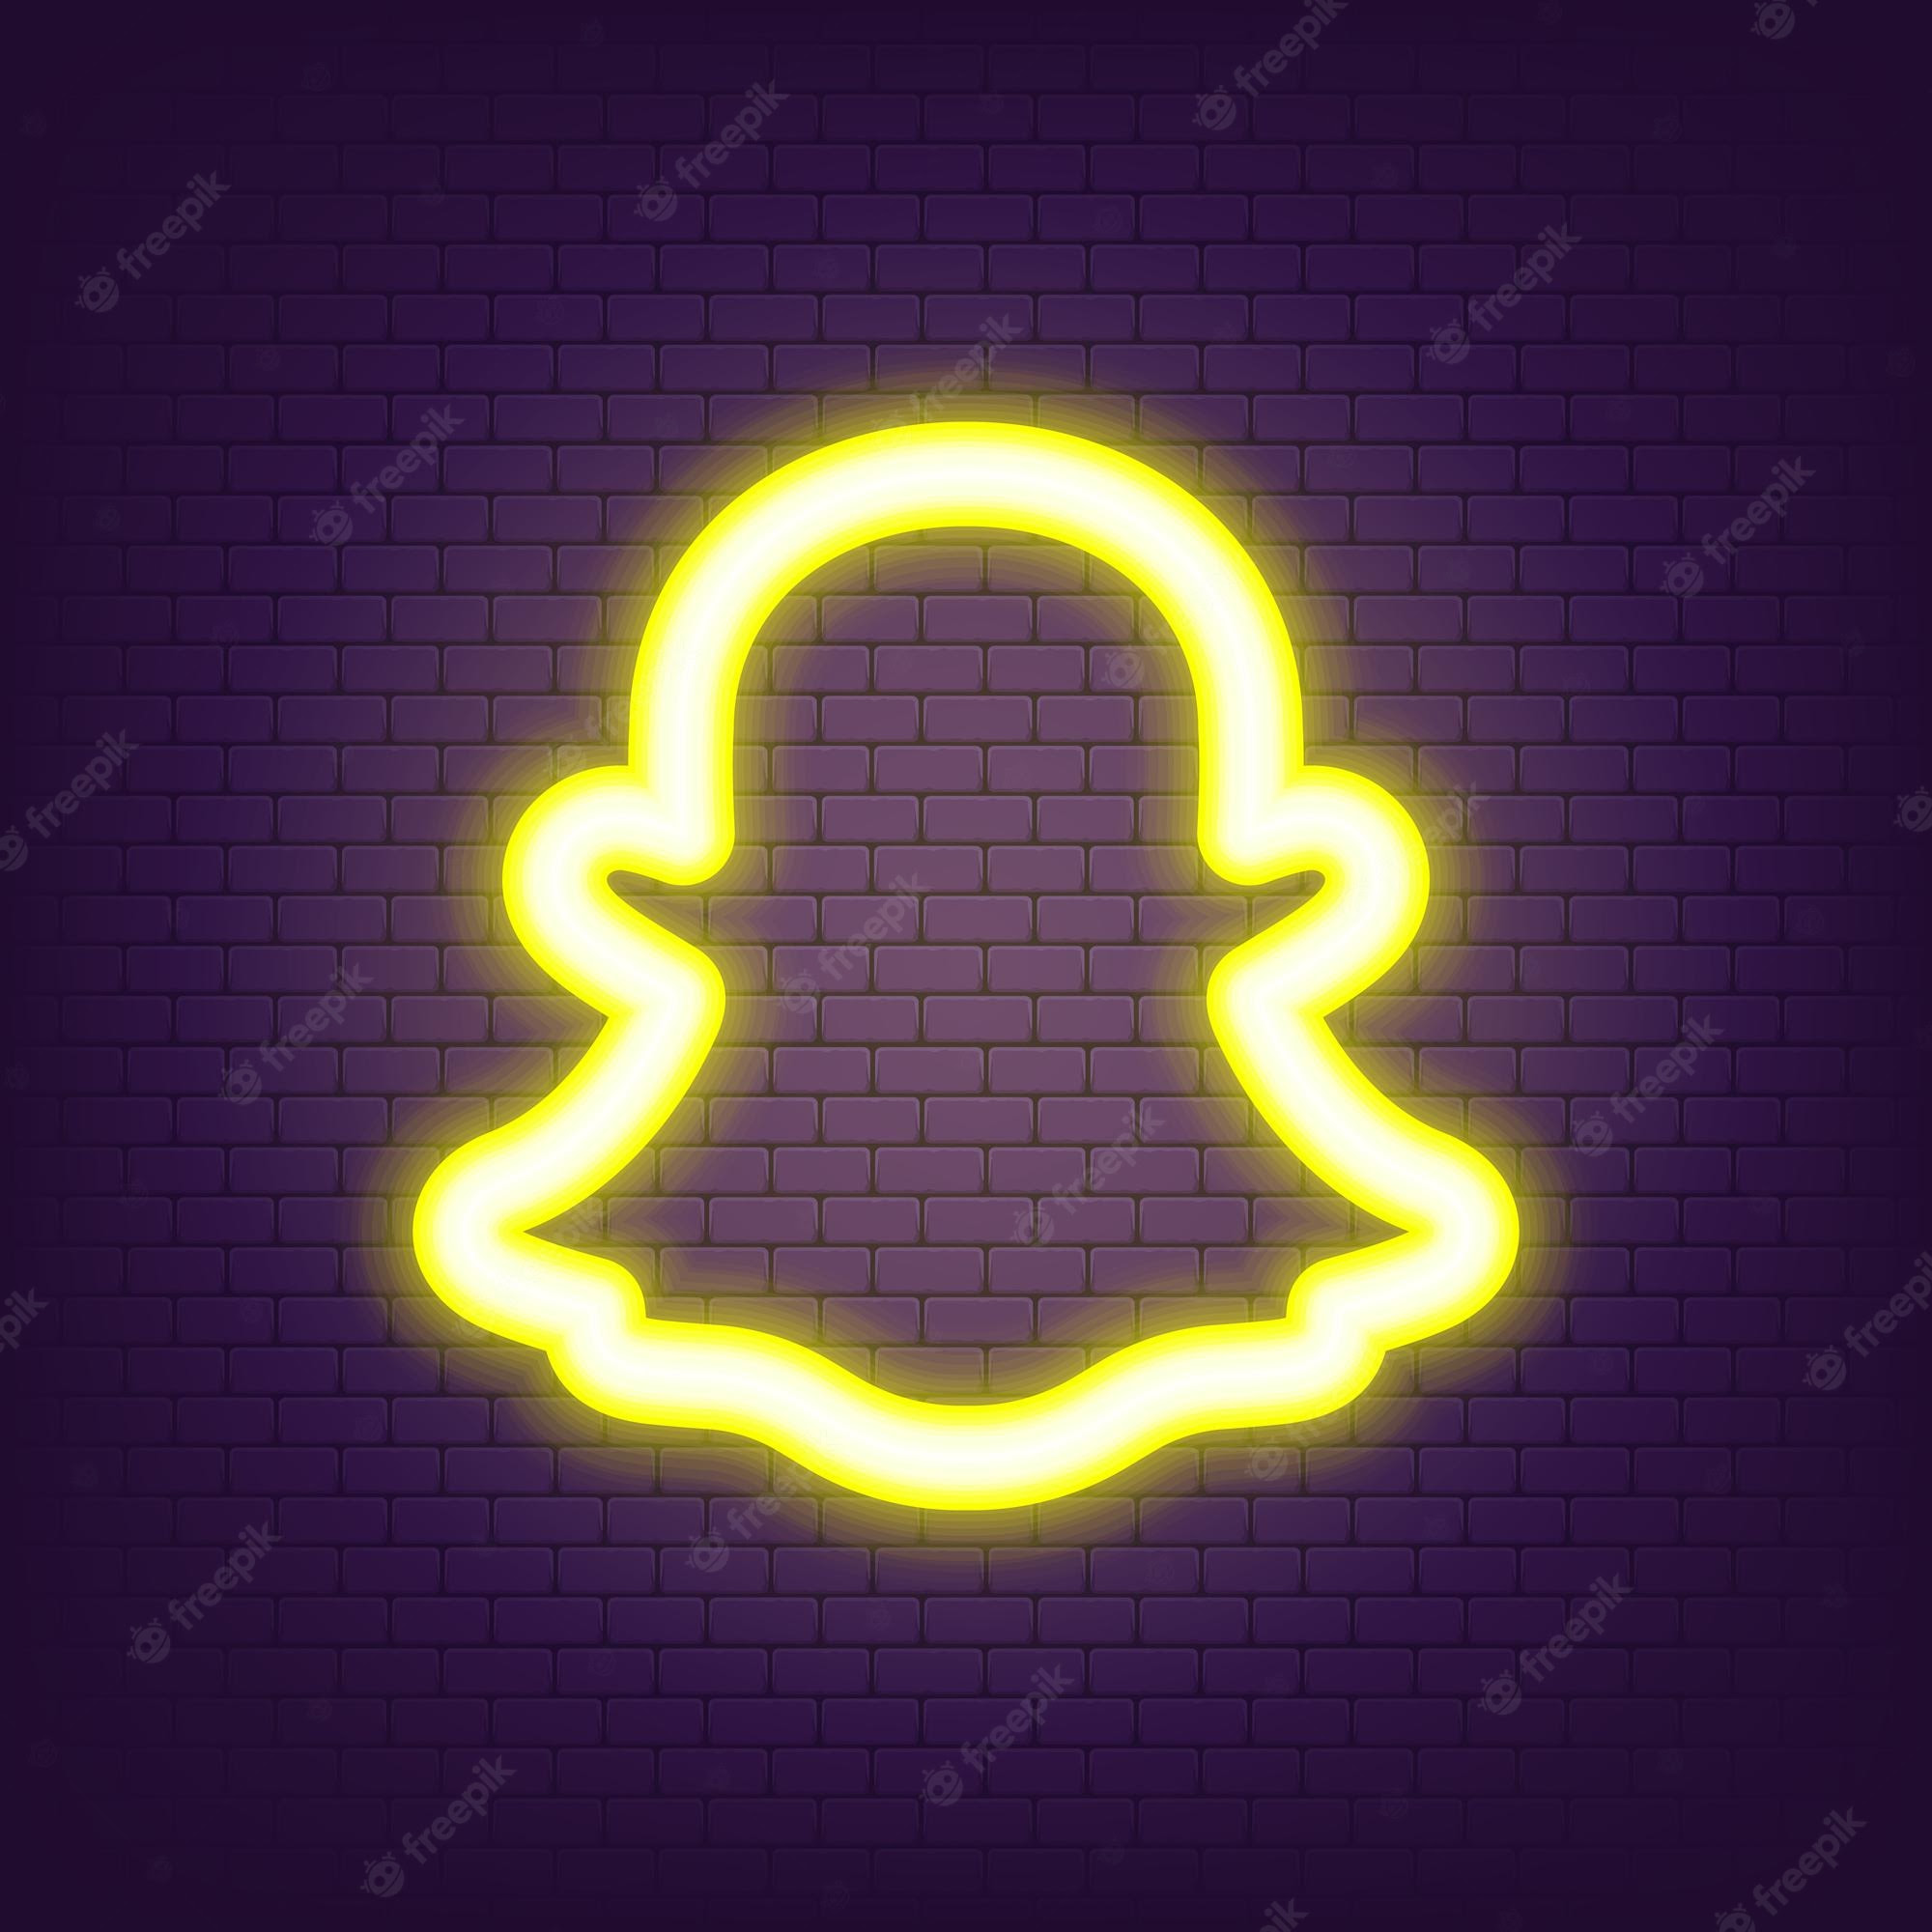 Snapchat post Vectors & Illustrations for Free Download | Freepik